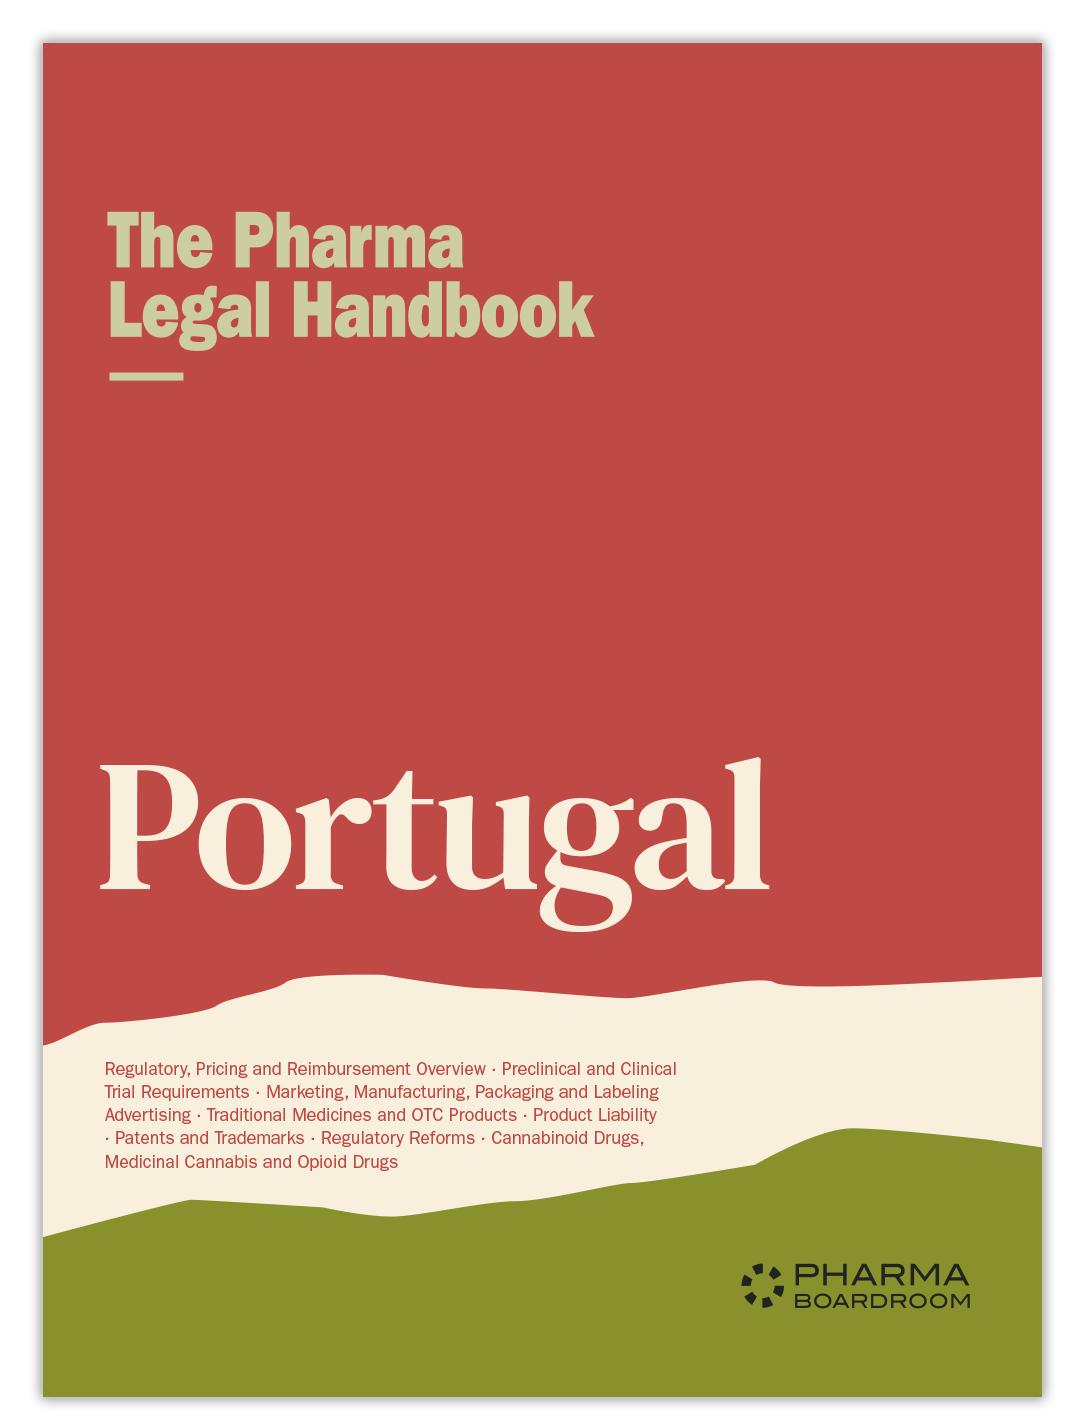 The Pharma Legal Handbook: Portugal